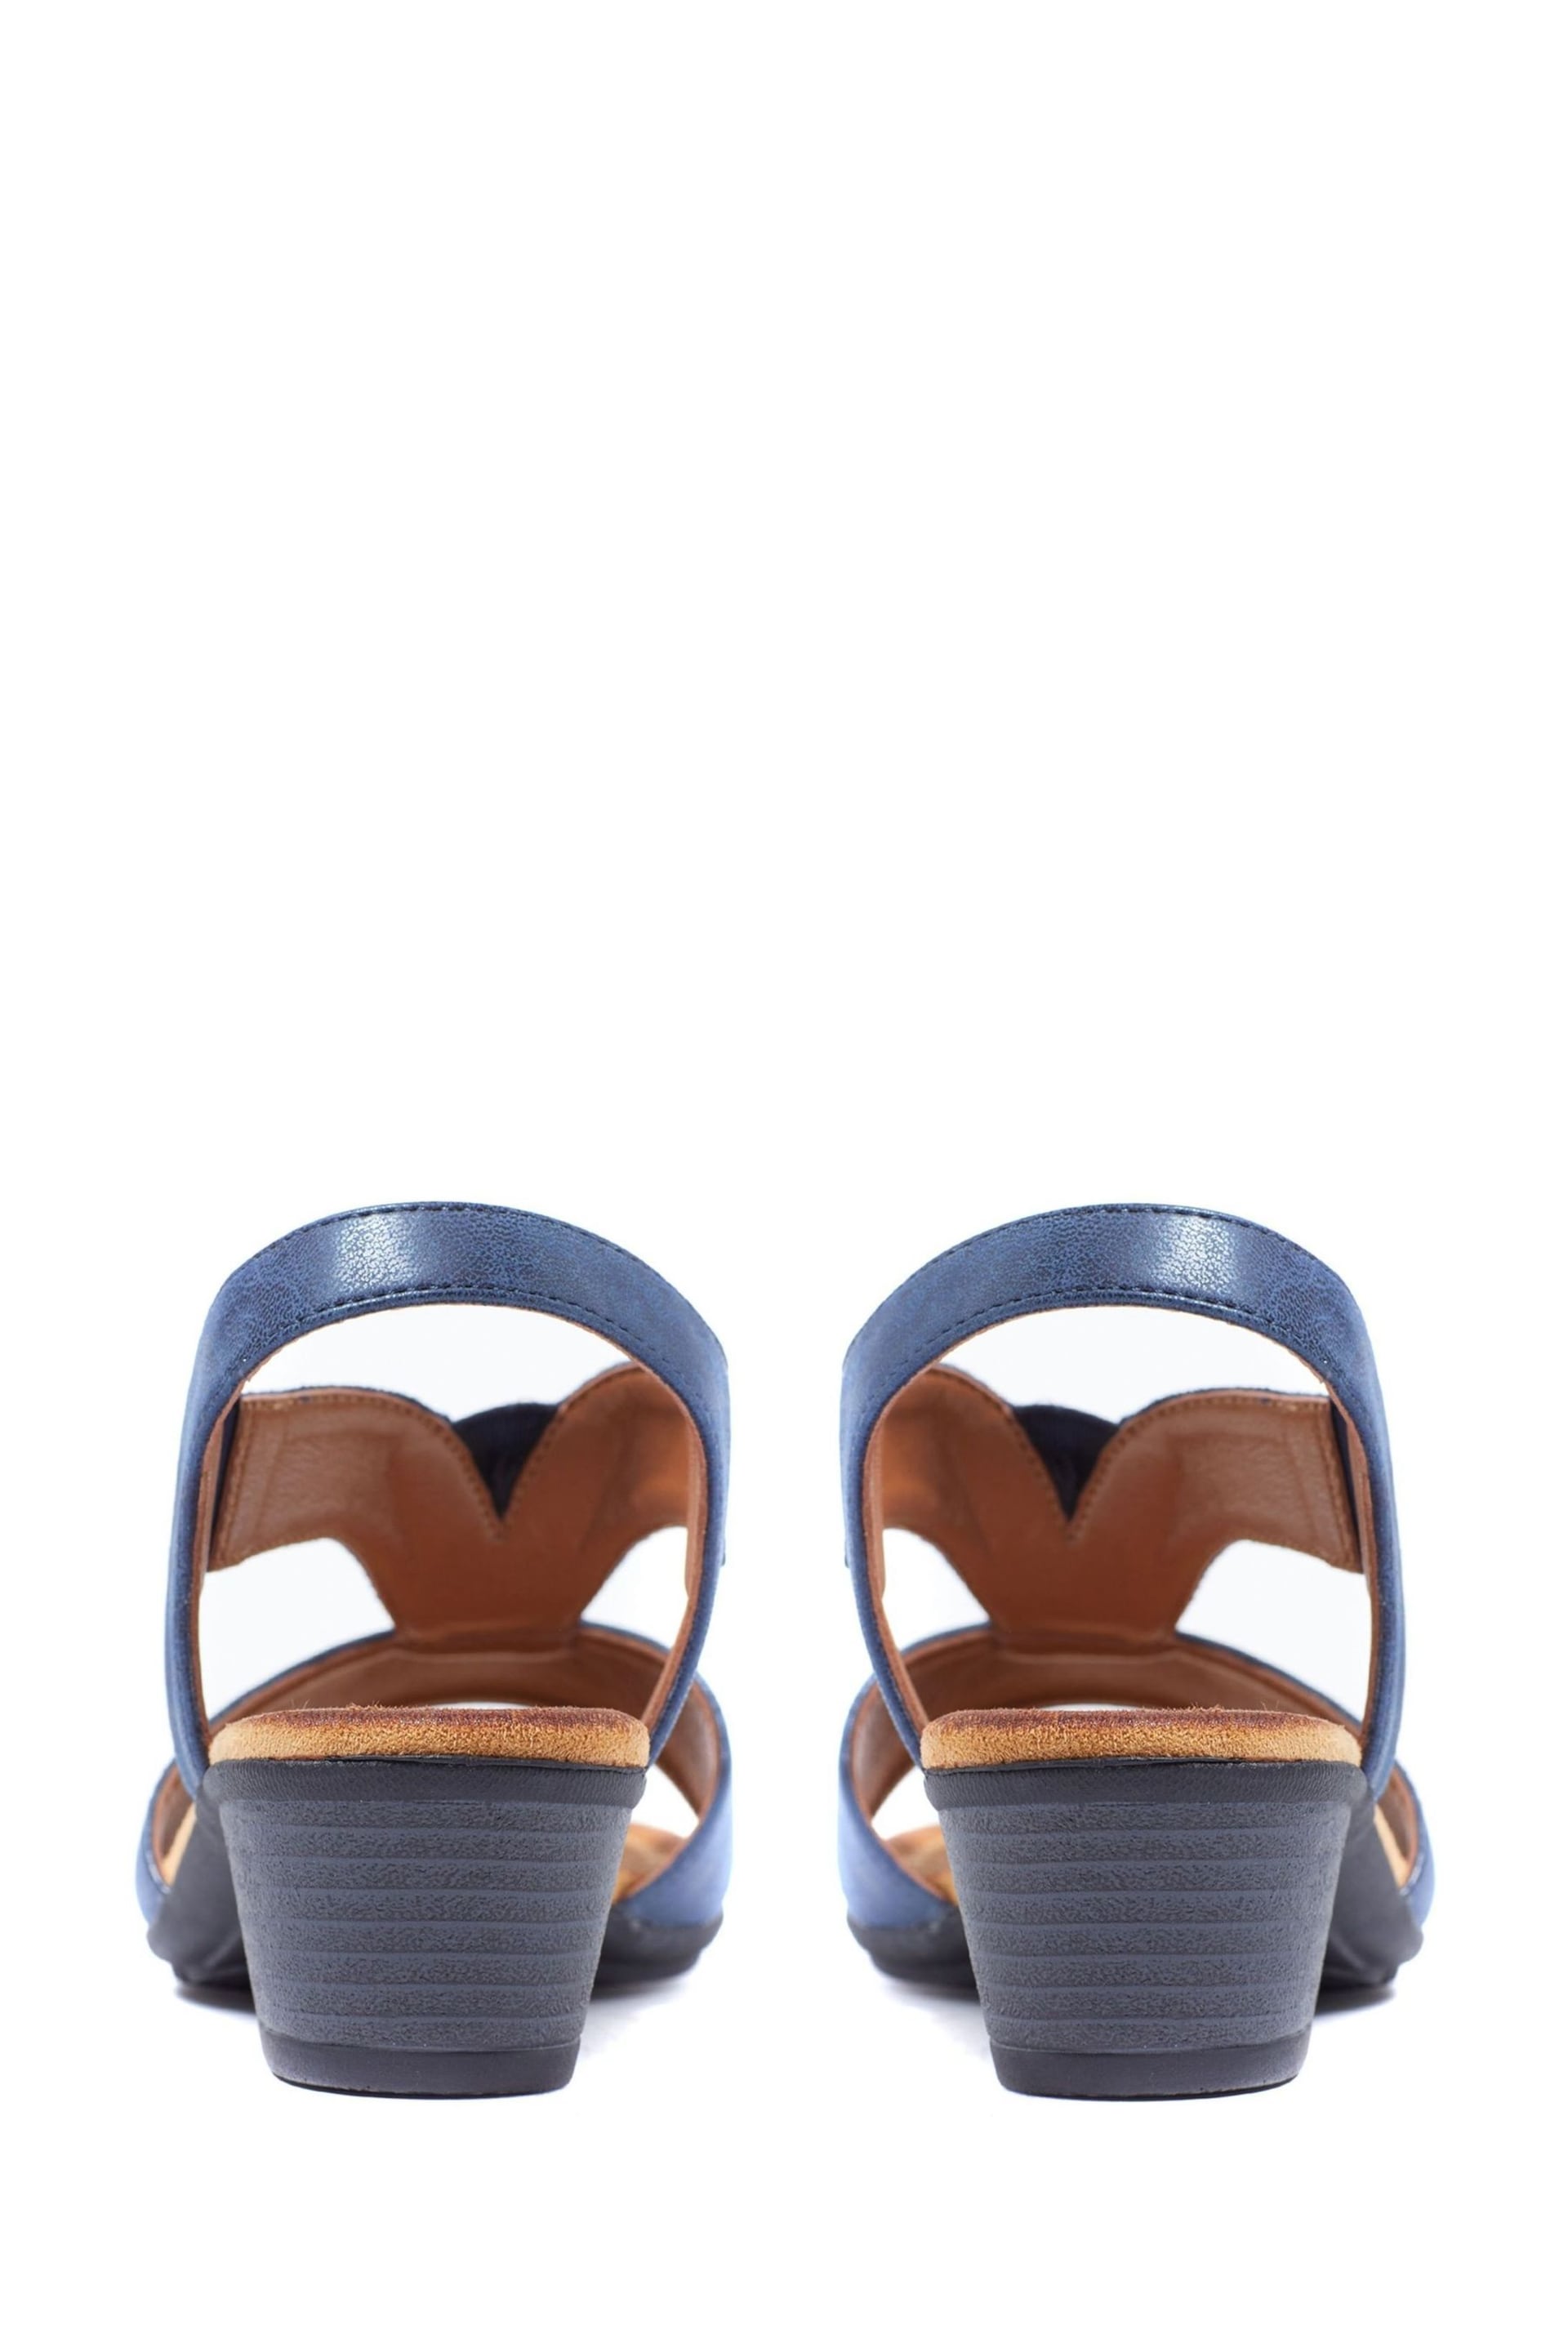 Pavers Blue Heeled Slingback Sandals - Image 3 of 5